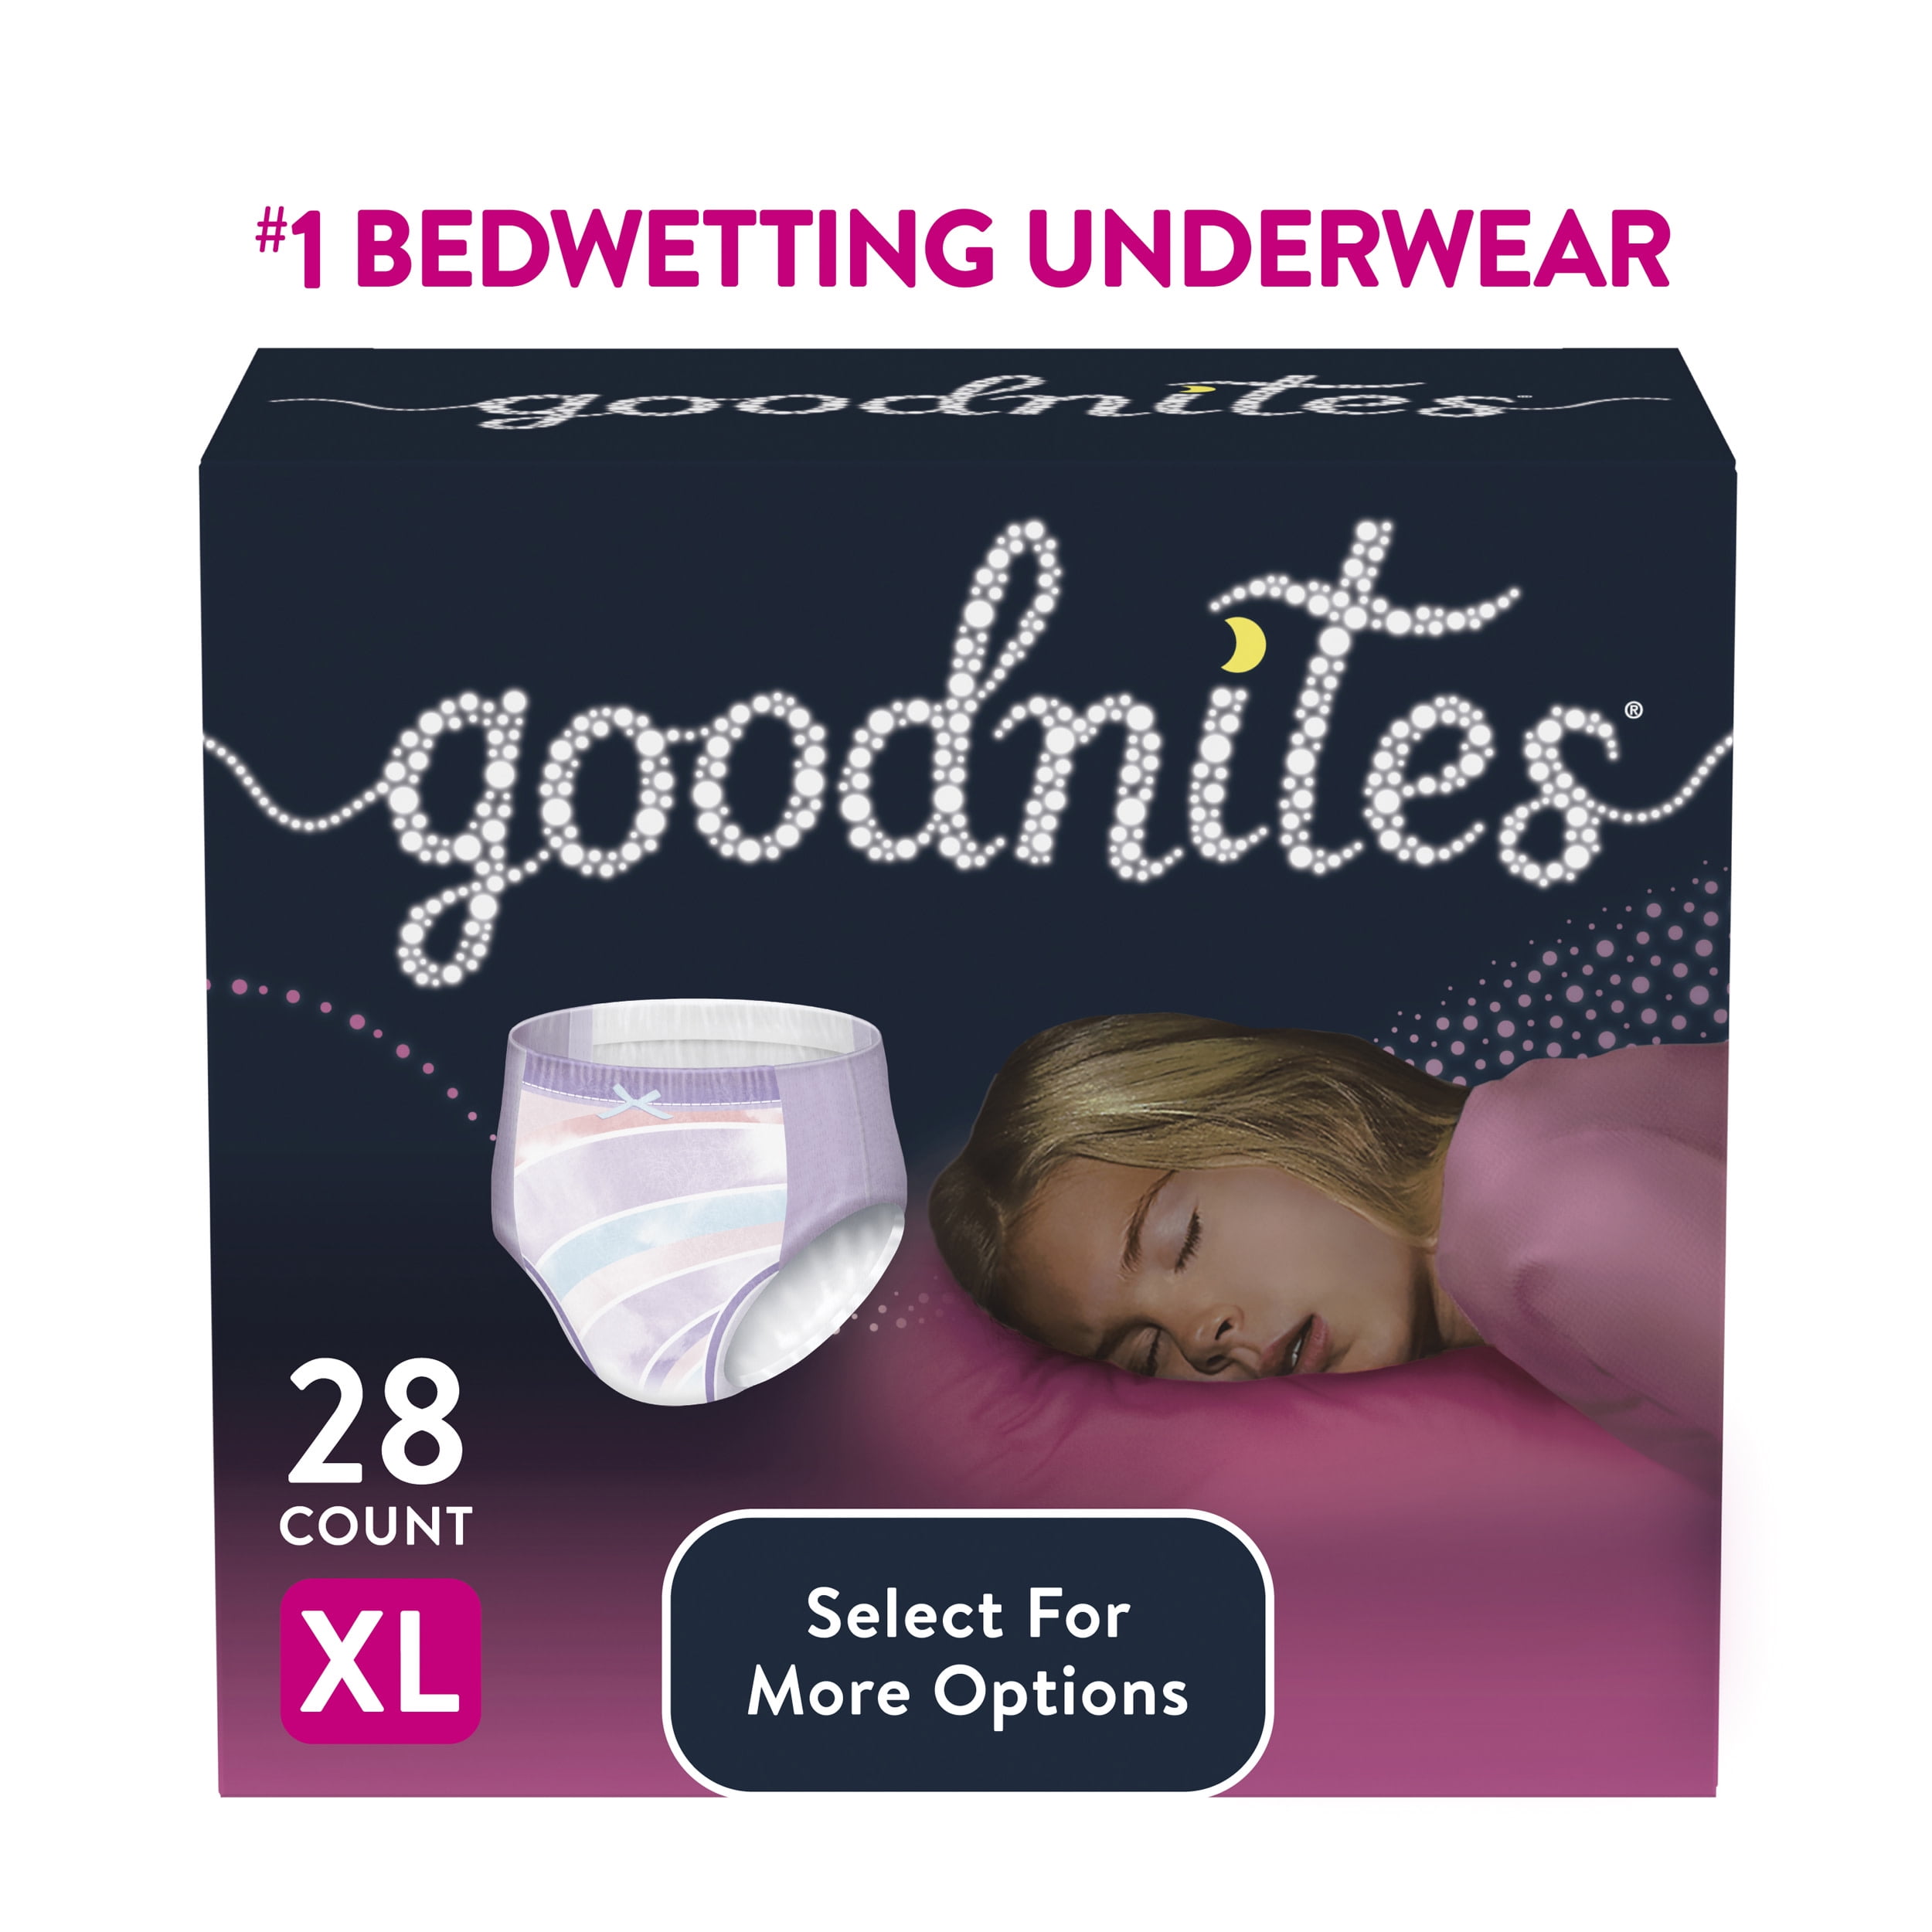 Goodnites Girls' Bedwetting Underwear XS (28-43 lbs), 44 ct